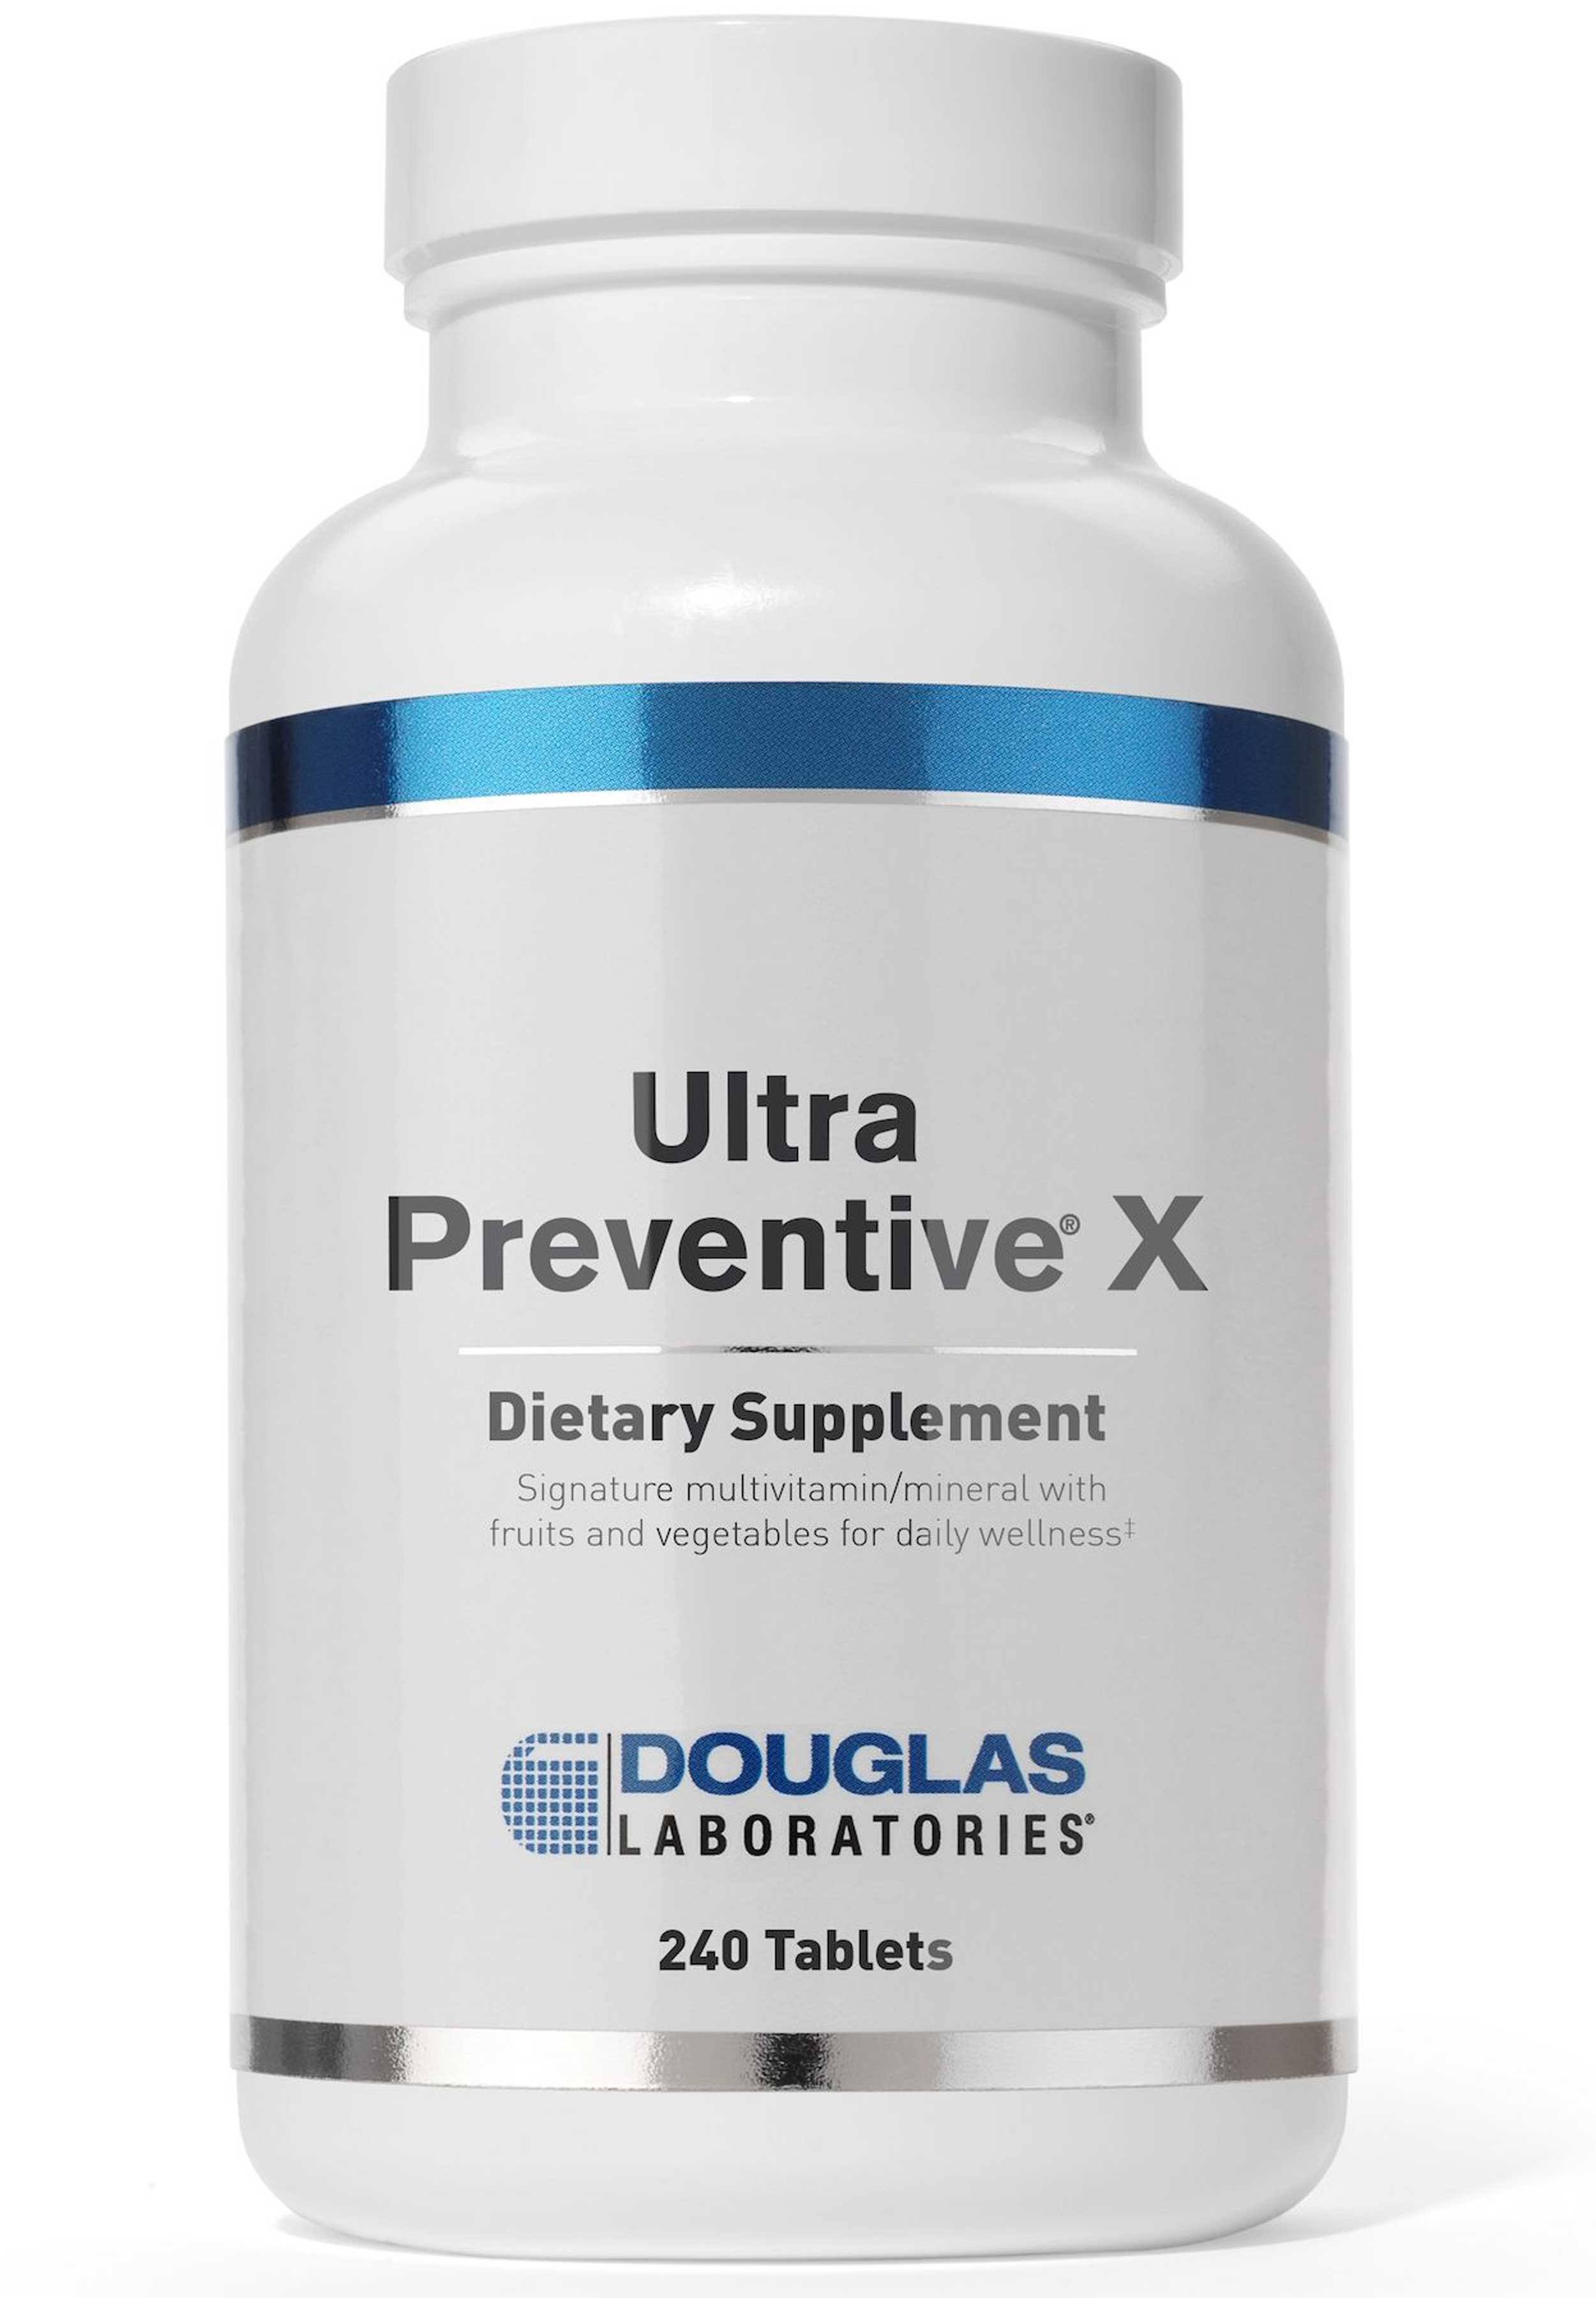 Douglas Laboratories - Ultra Preventive X, 240 Tablets